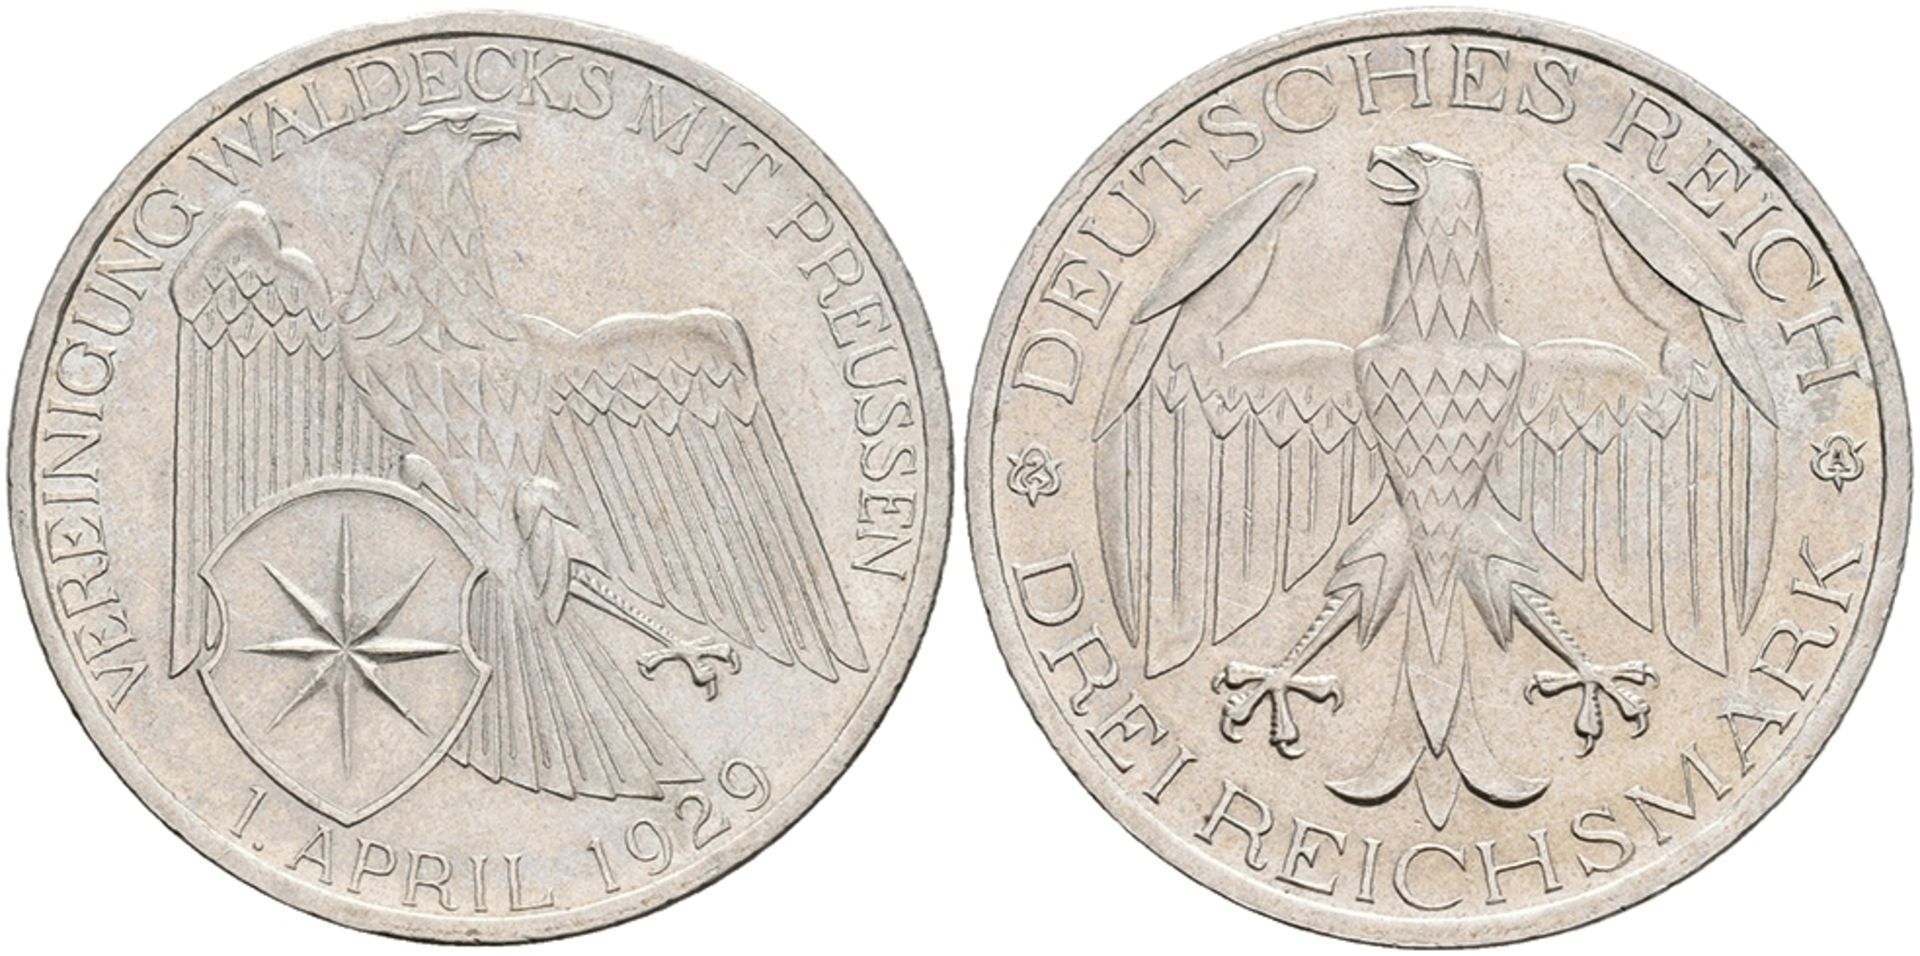 3 Reichsmark, 1929, Waldeck, kl. Kr., kl. Rf., vz. J. 337